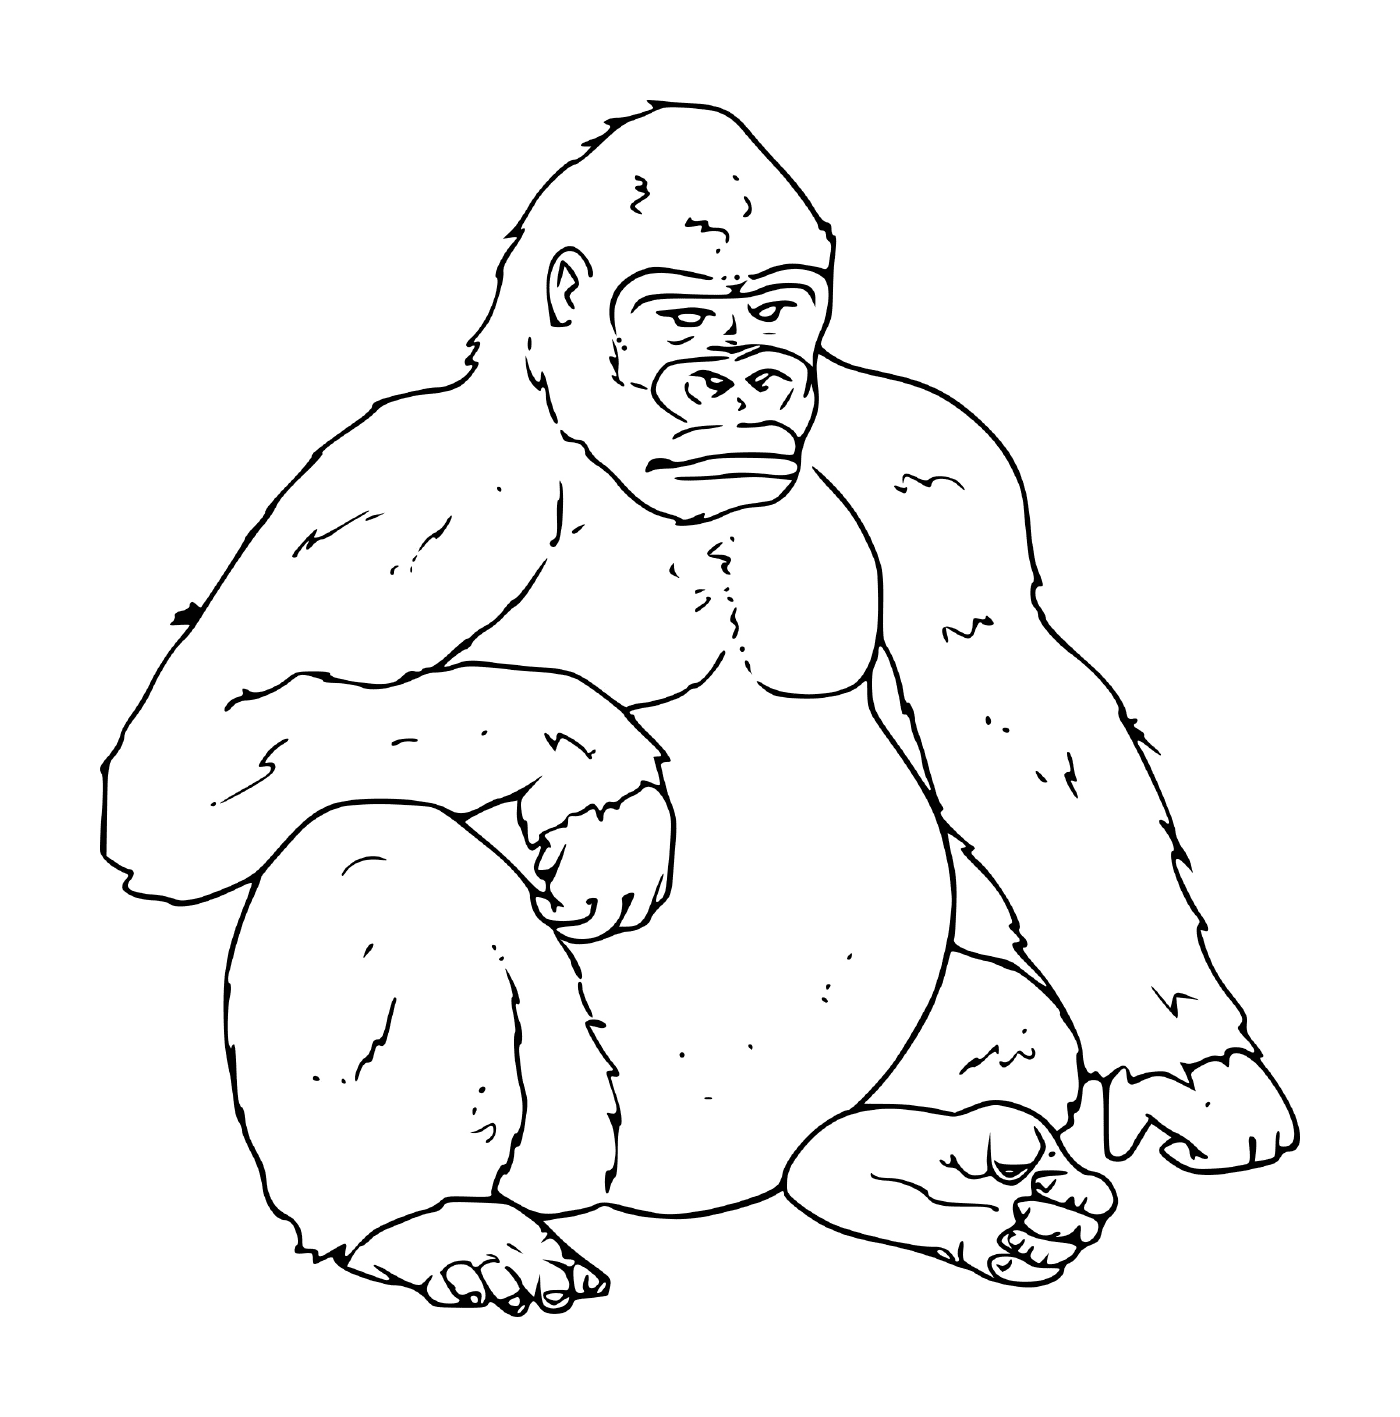  un gorilla seduto a terra della giungla 